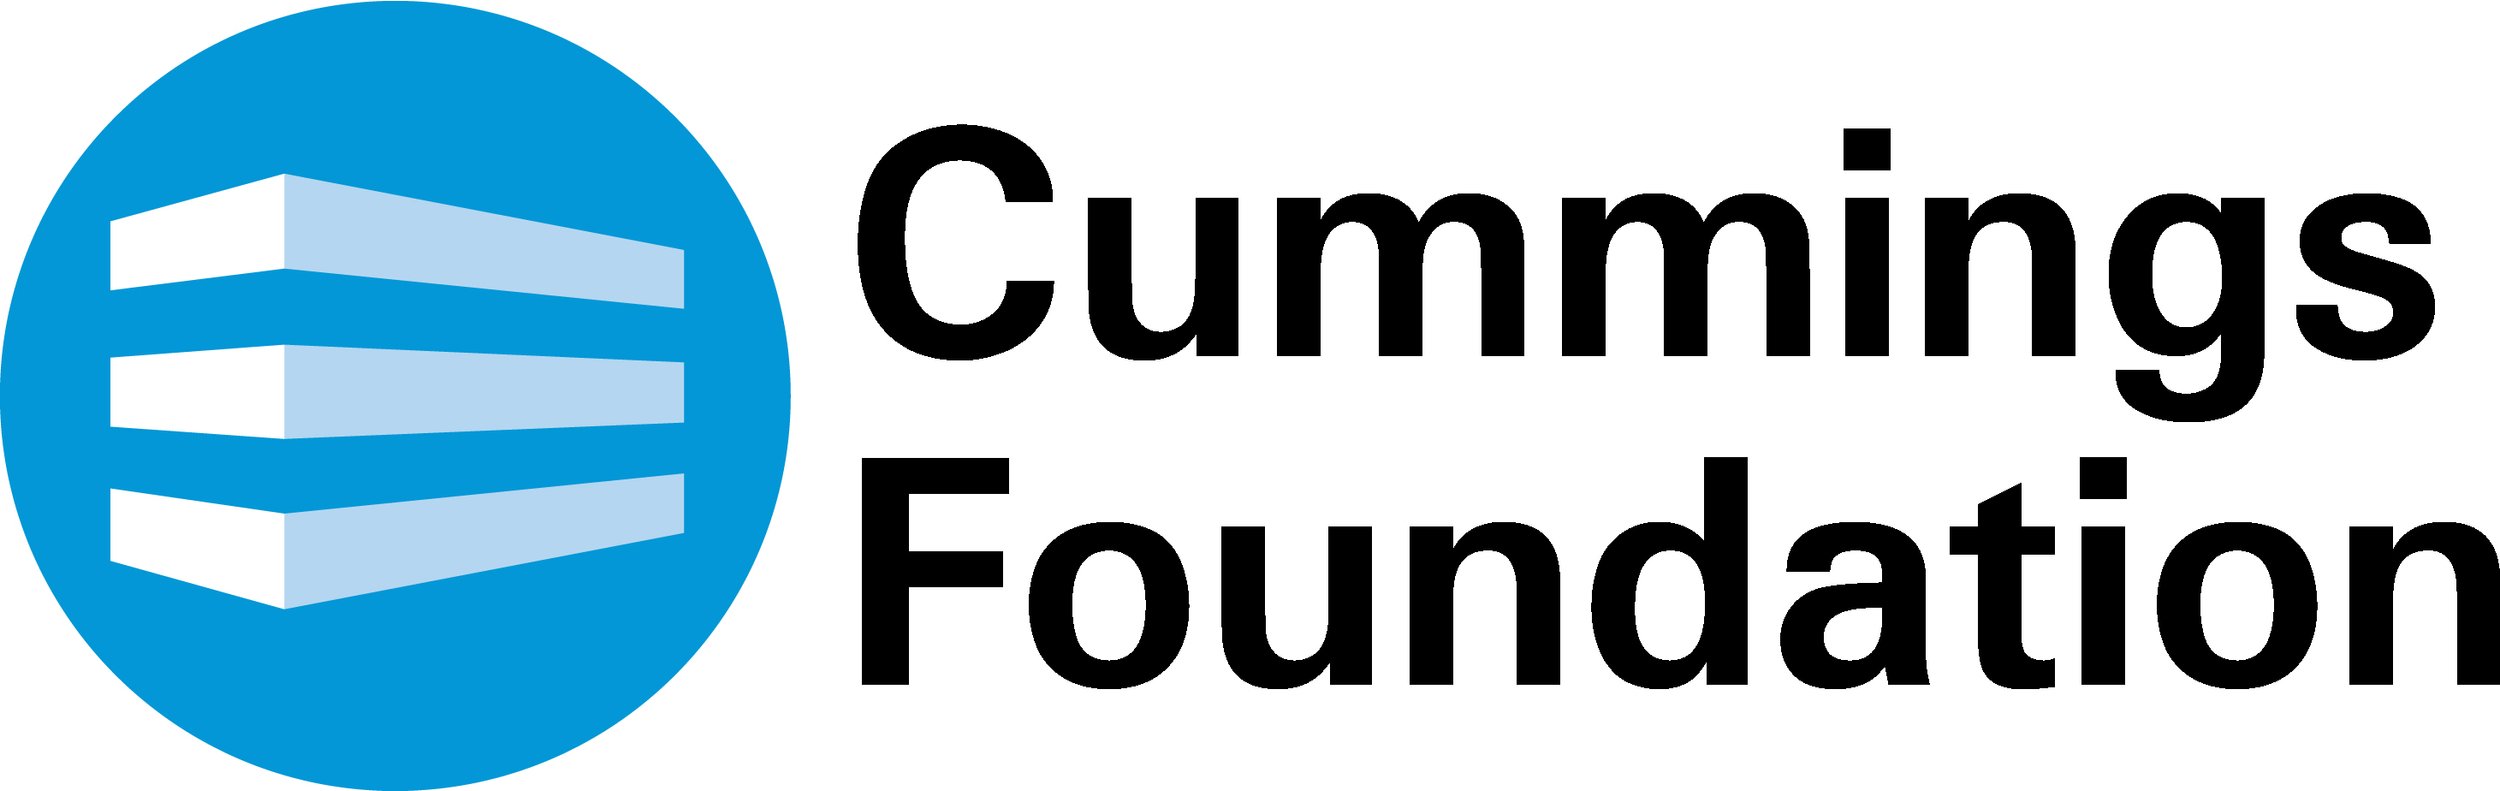 Cummings Foundation logo.jpg